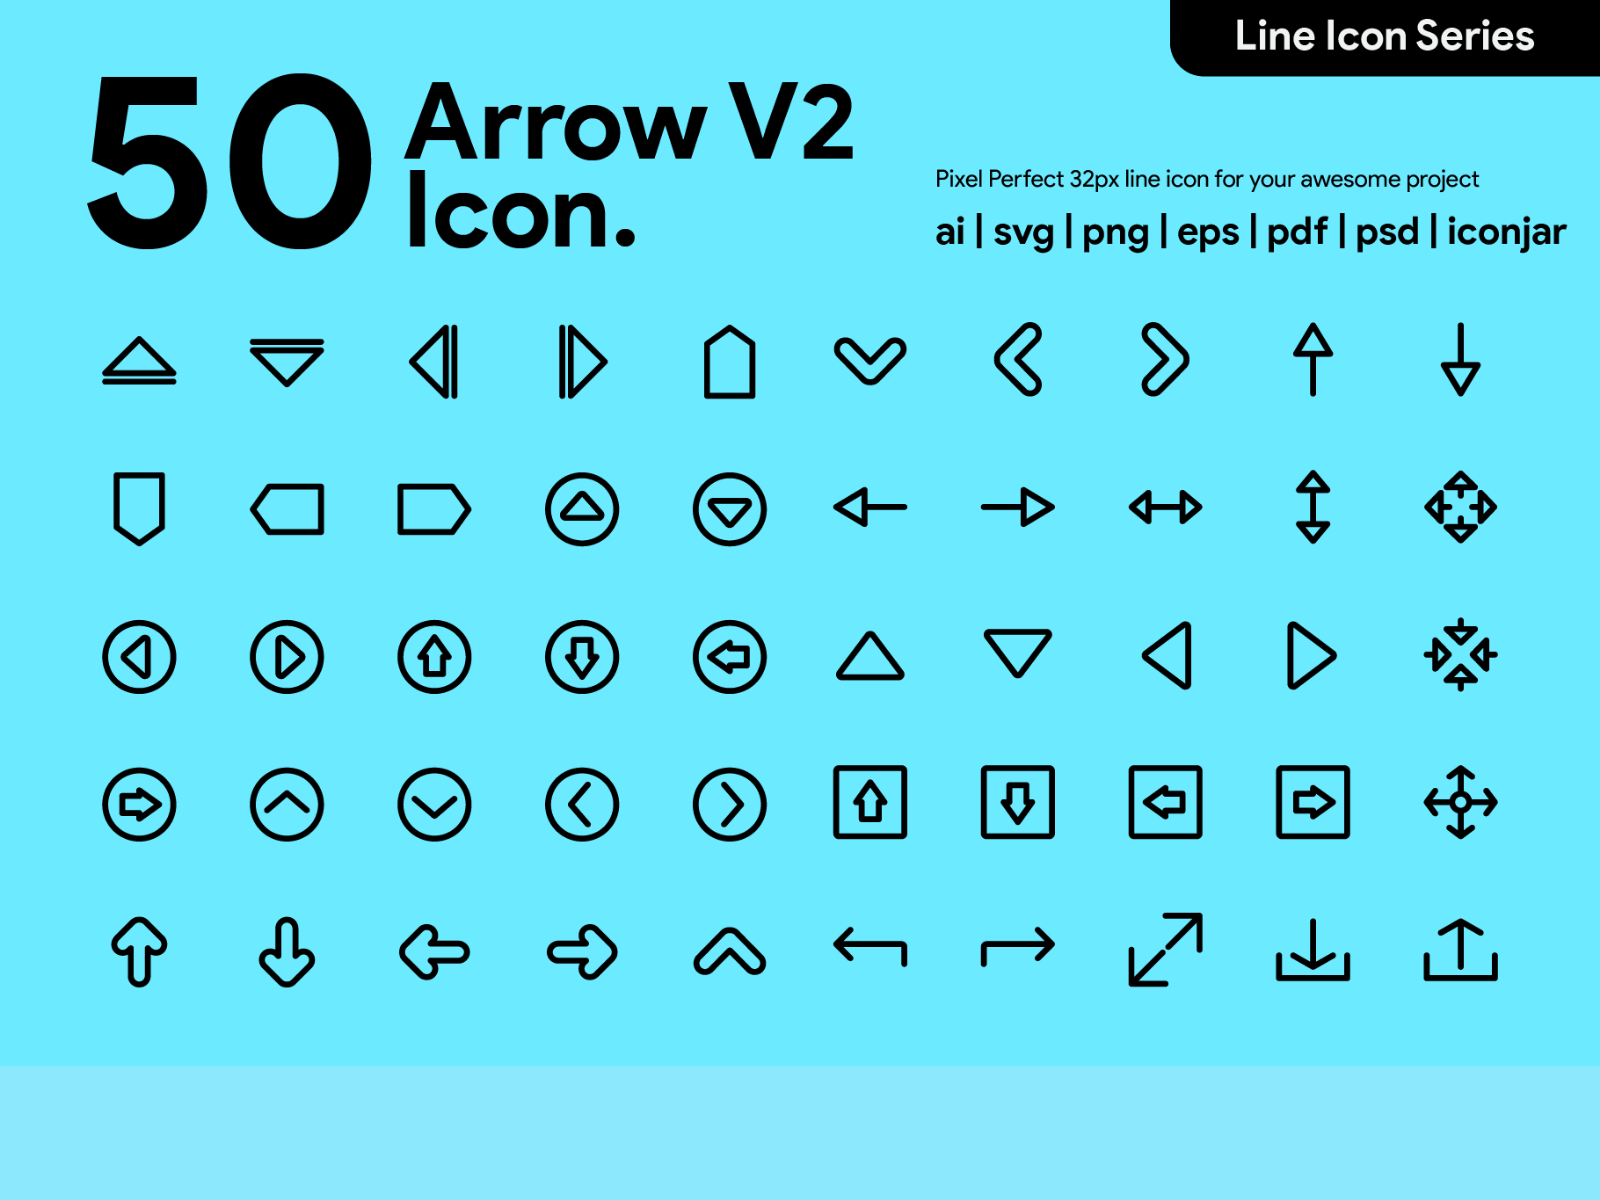 App icons design idea #233: Kawaicon - 50 Arrow Line Icon